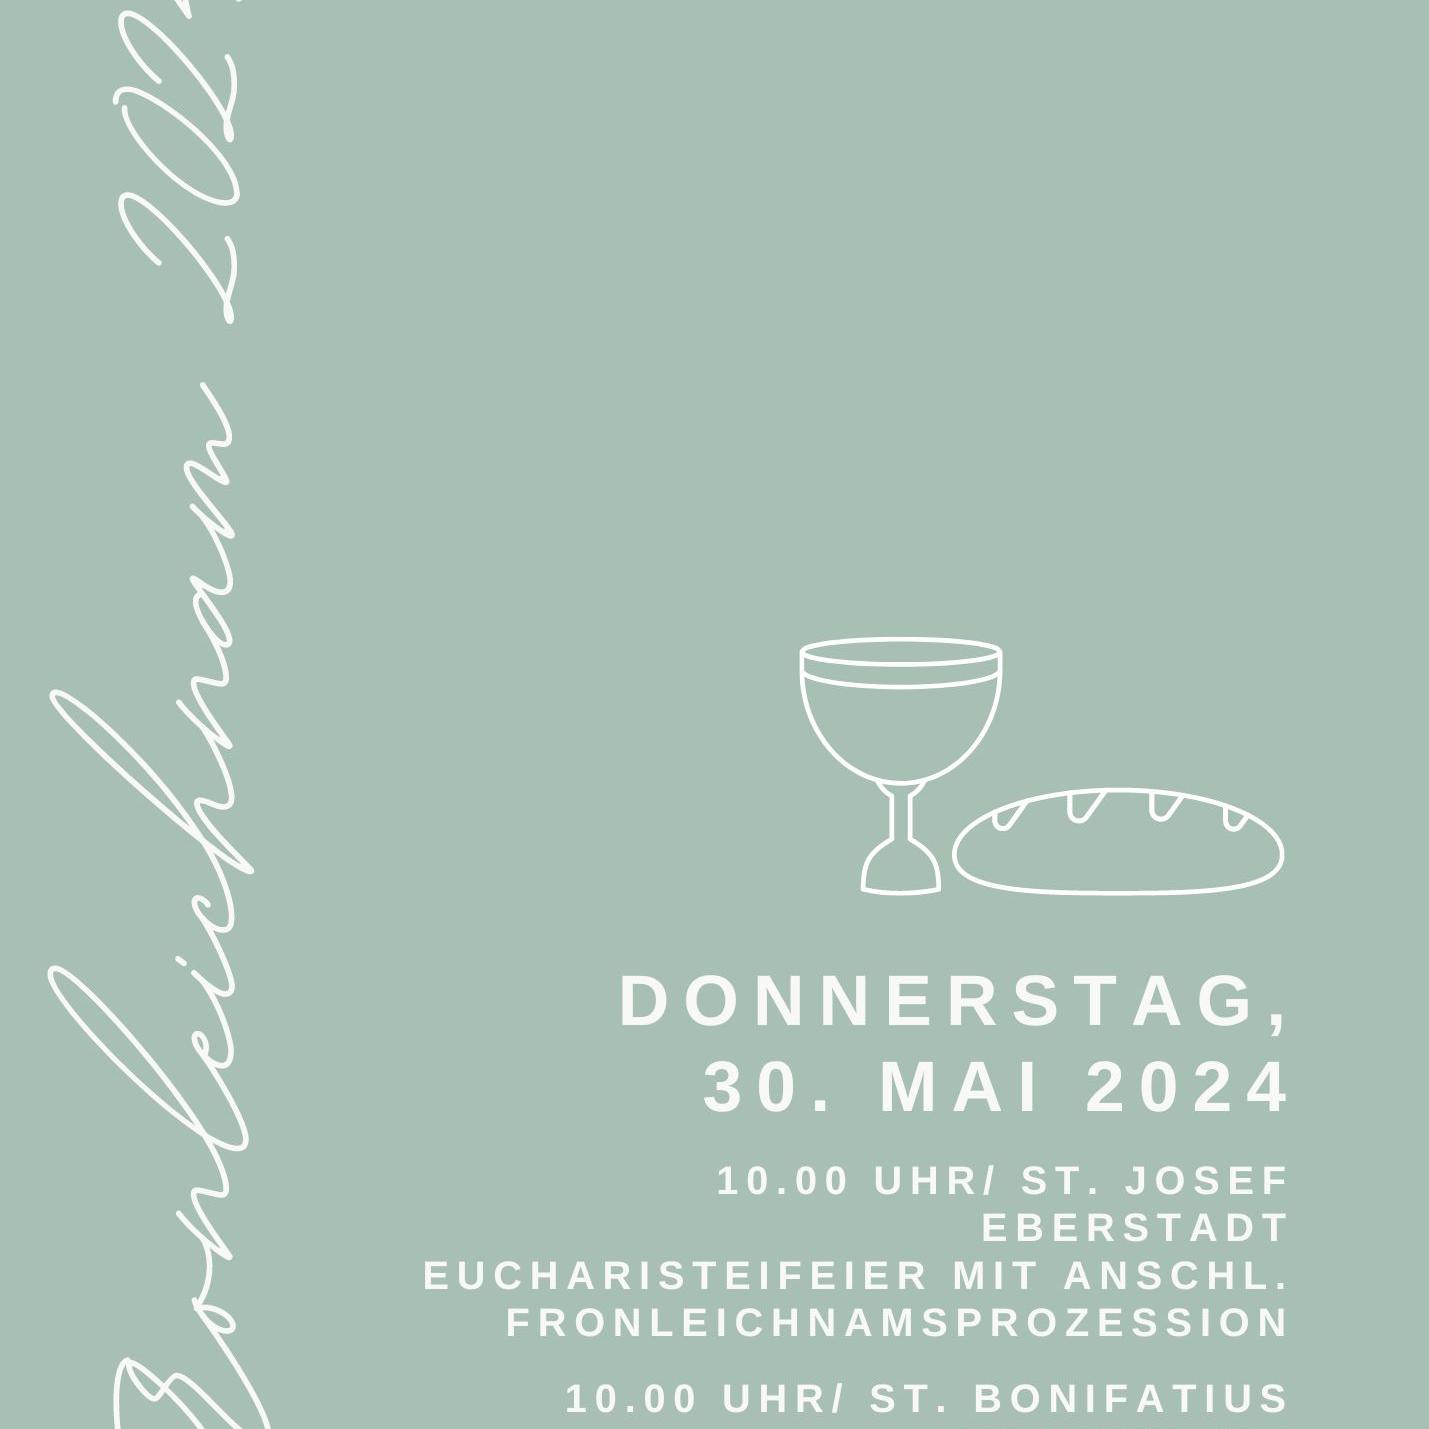 Plakat Fronleichnam 2024